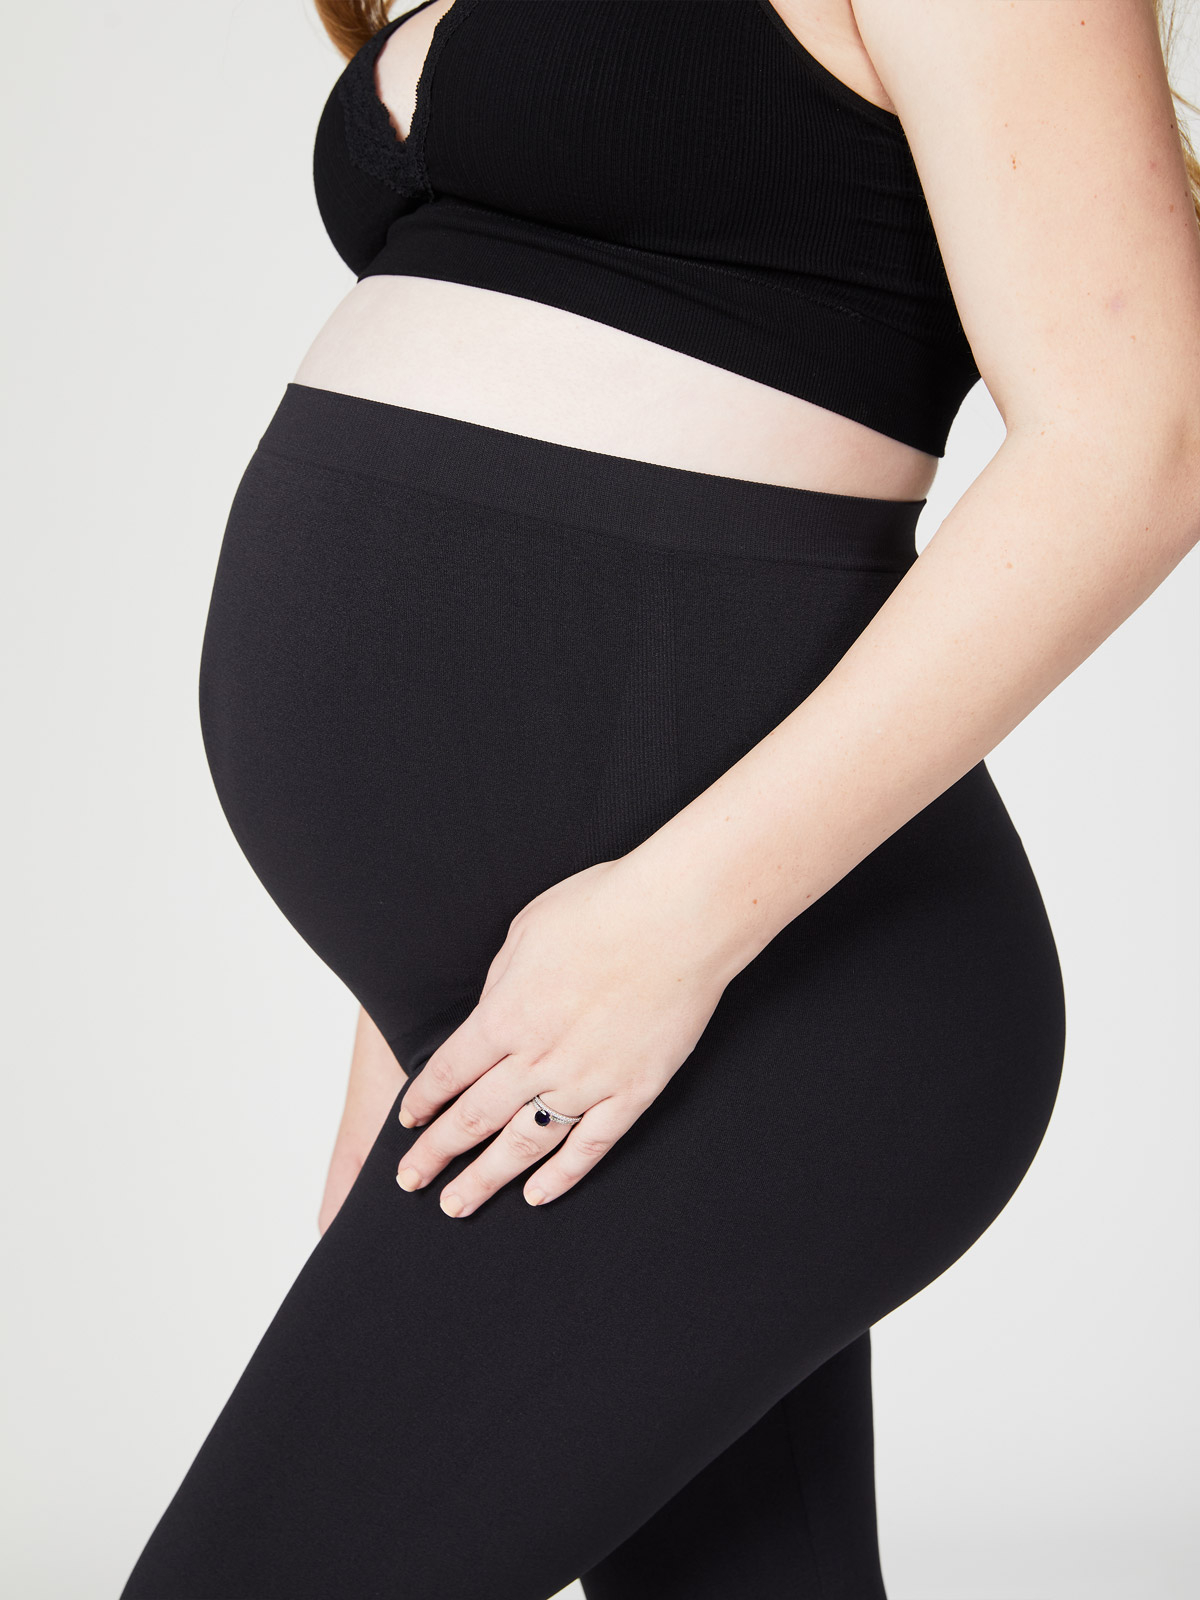 Liberty Pregnancy Leggings l Best Quality Maternity Basics & Essentials